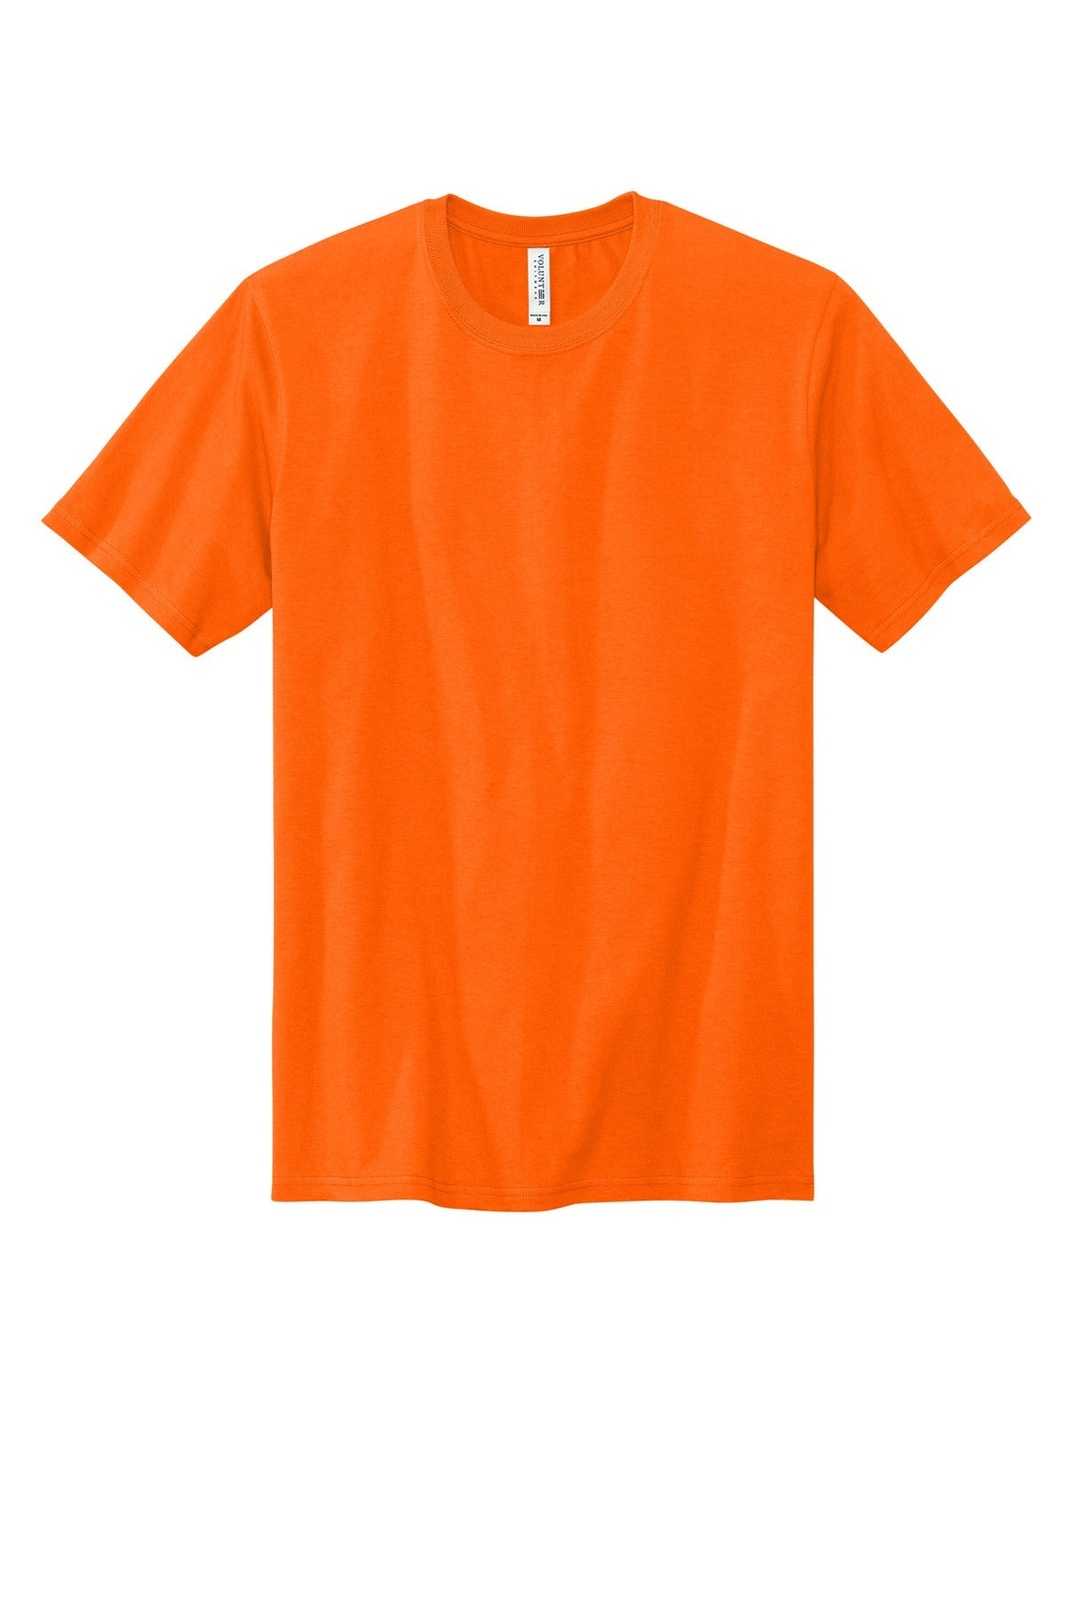 Volunteer Knitwear VL100 All-American Tee - Safety Orange - HIT a Double - 1